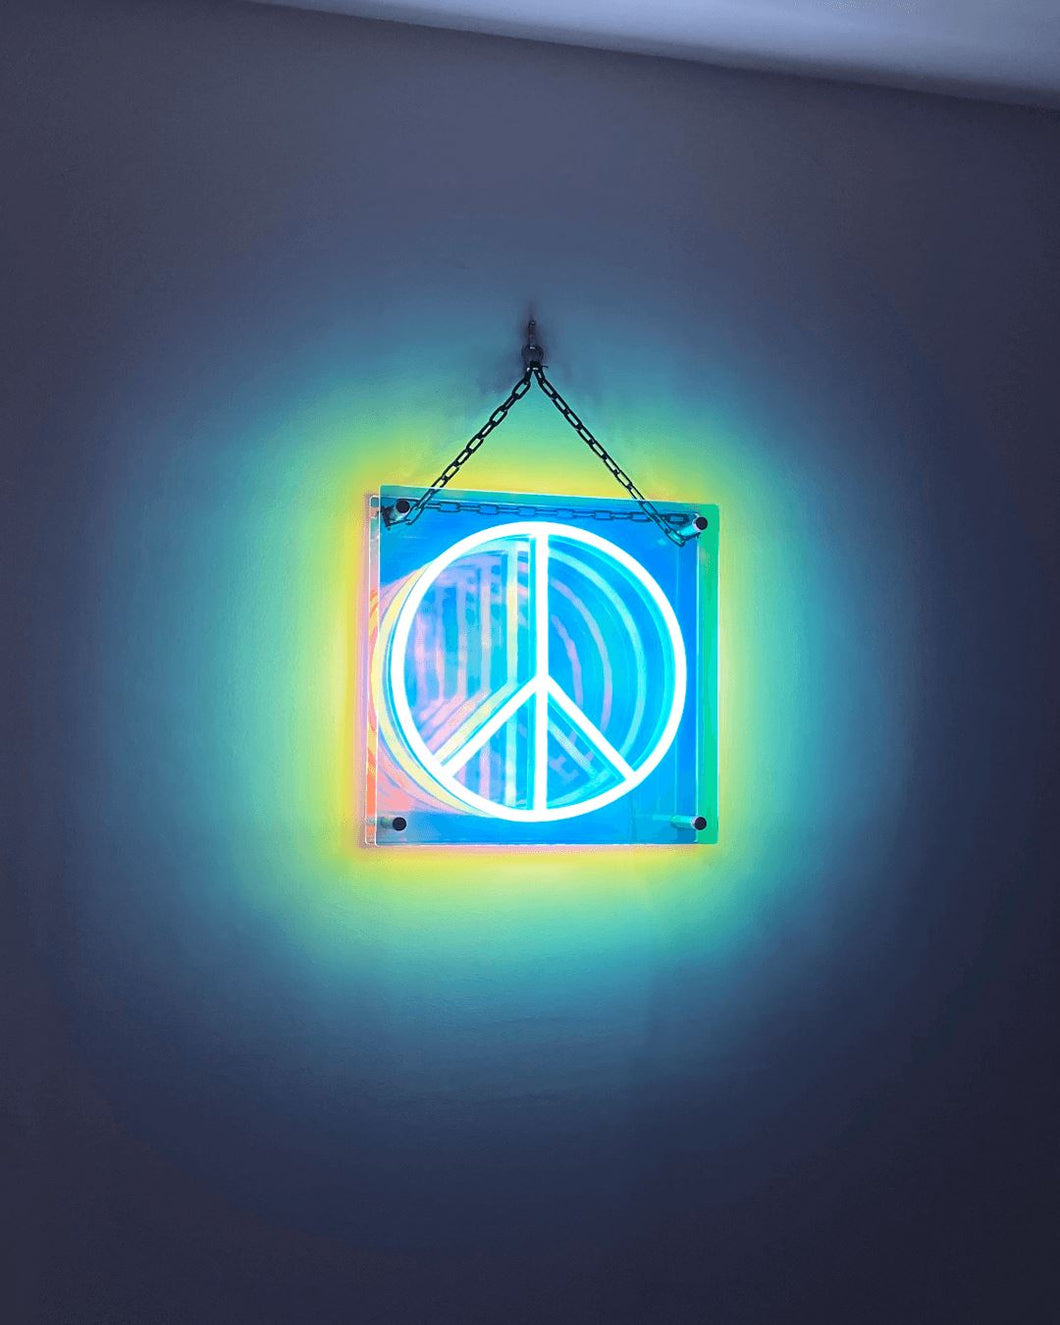 Infinite Peace LED Neon Sign